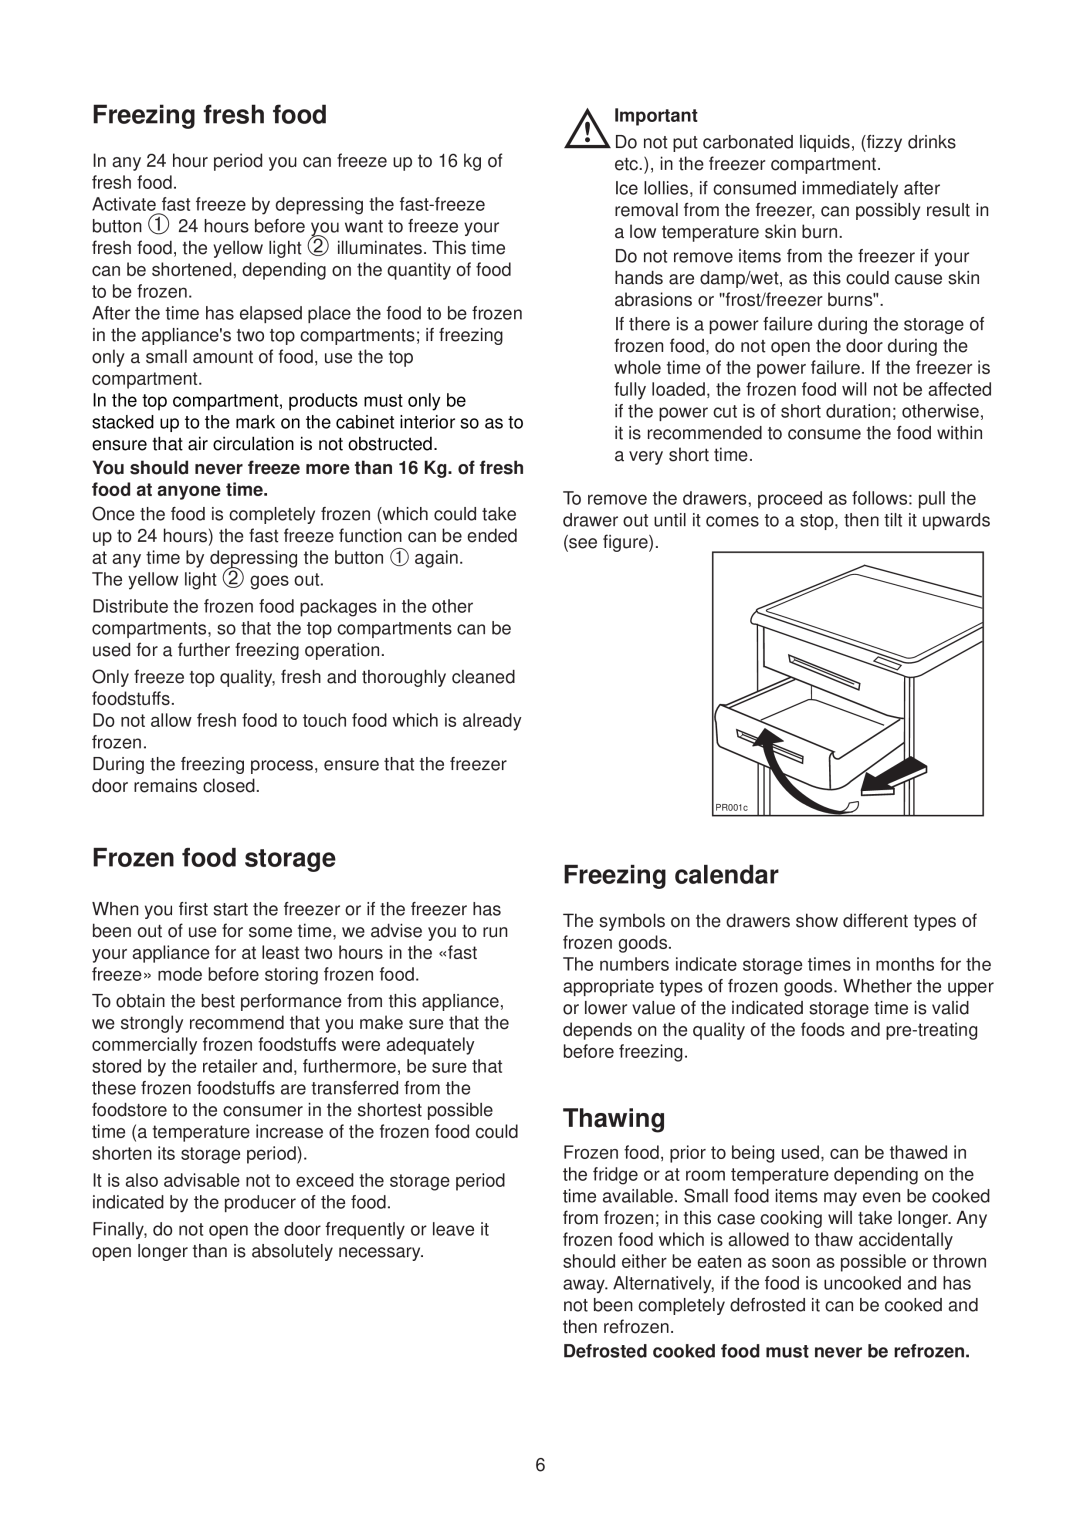 Electrolux EU 6233 manual Freezing fresh food, Frozen food storage, Freezing calendar, Thawing 